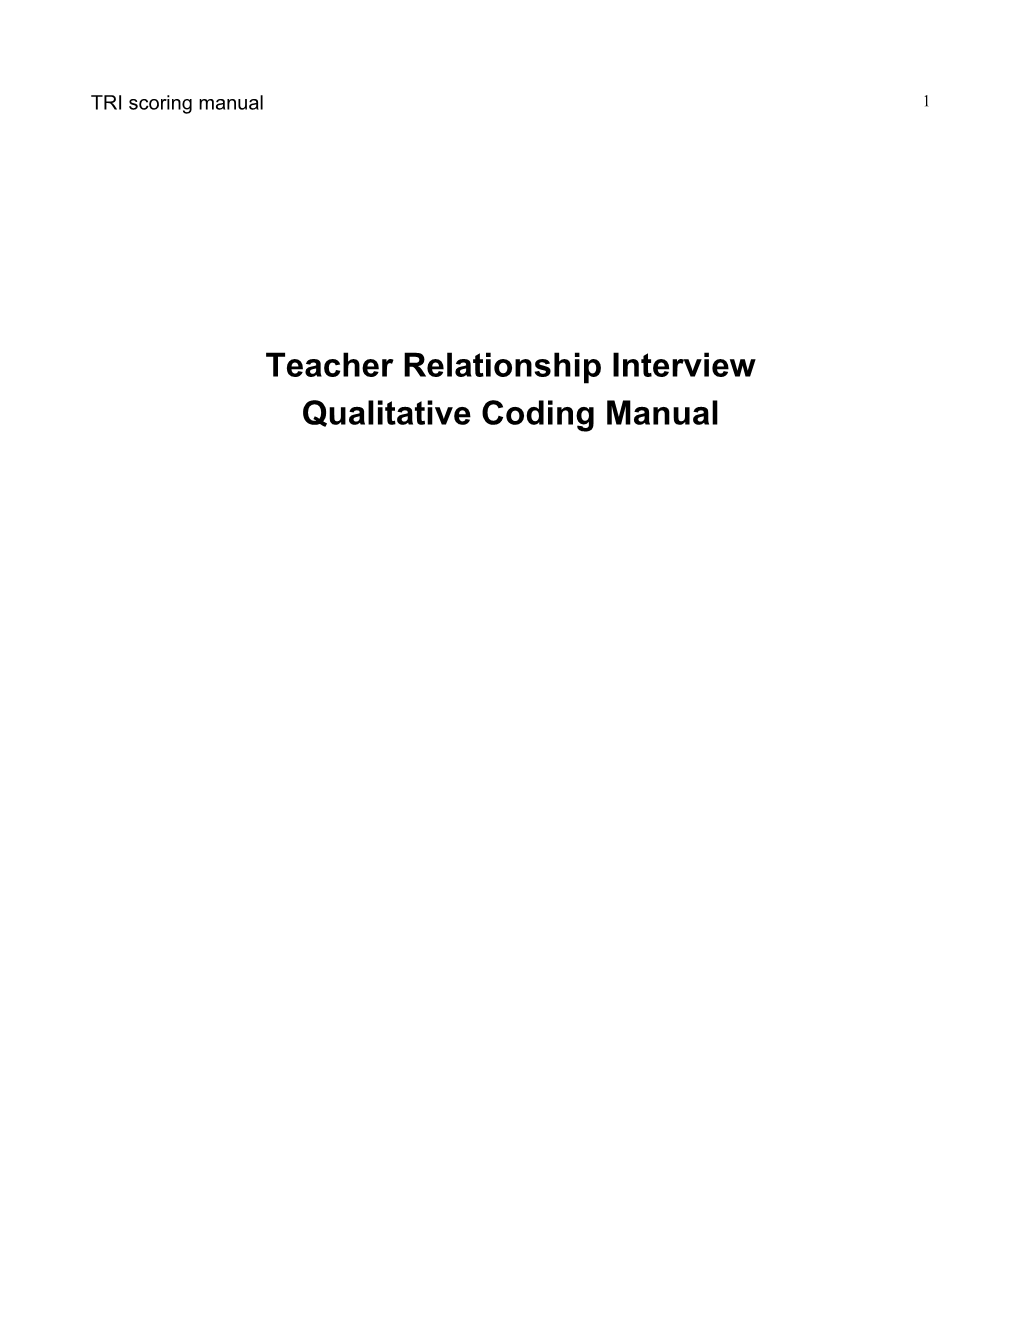 Teacher Relationship Interview Coding Manual